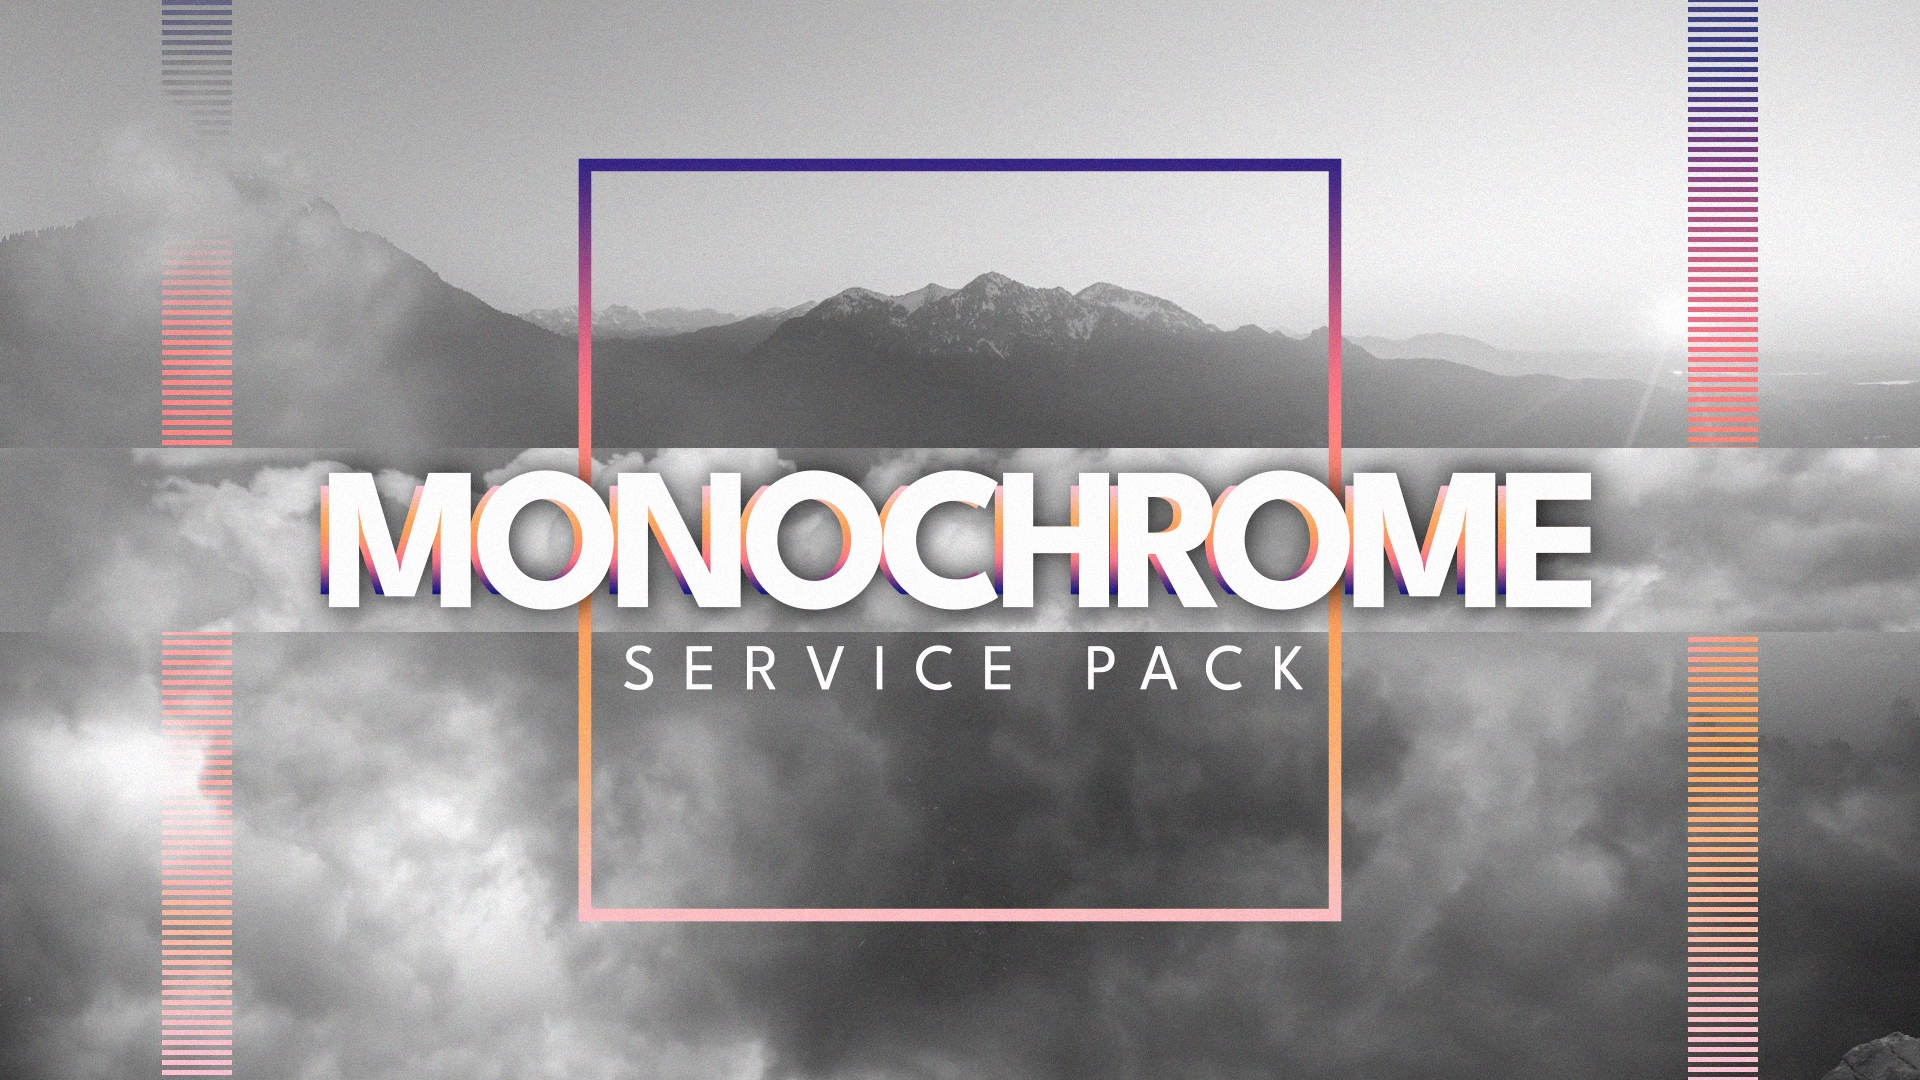 Monochrome Service Pack